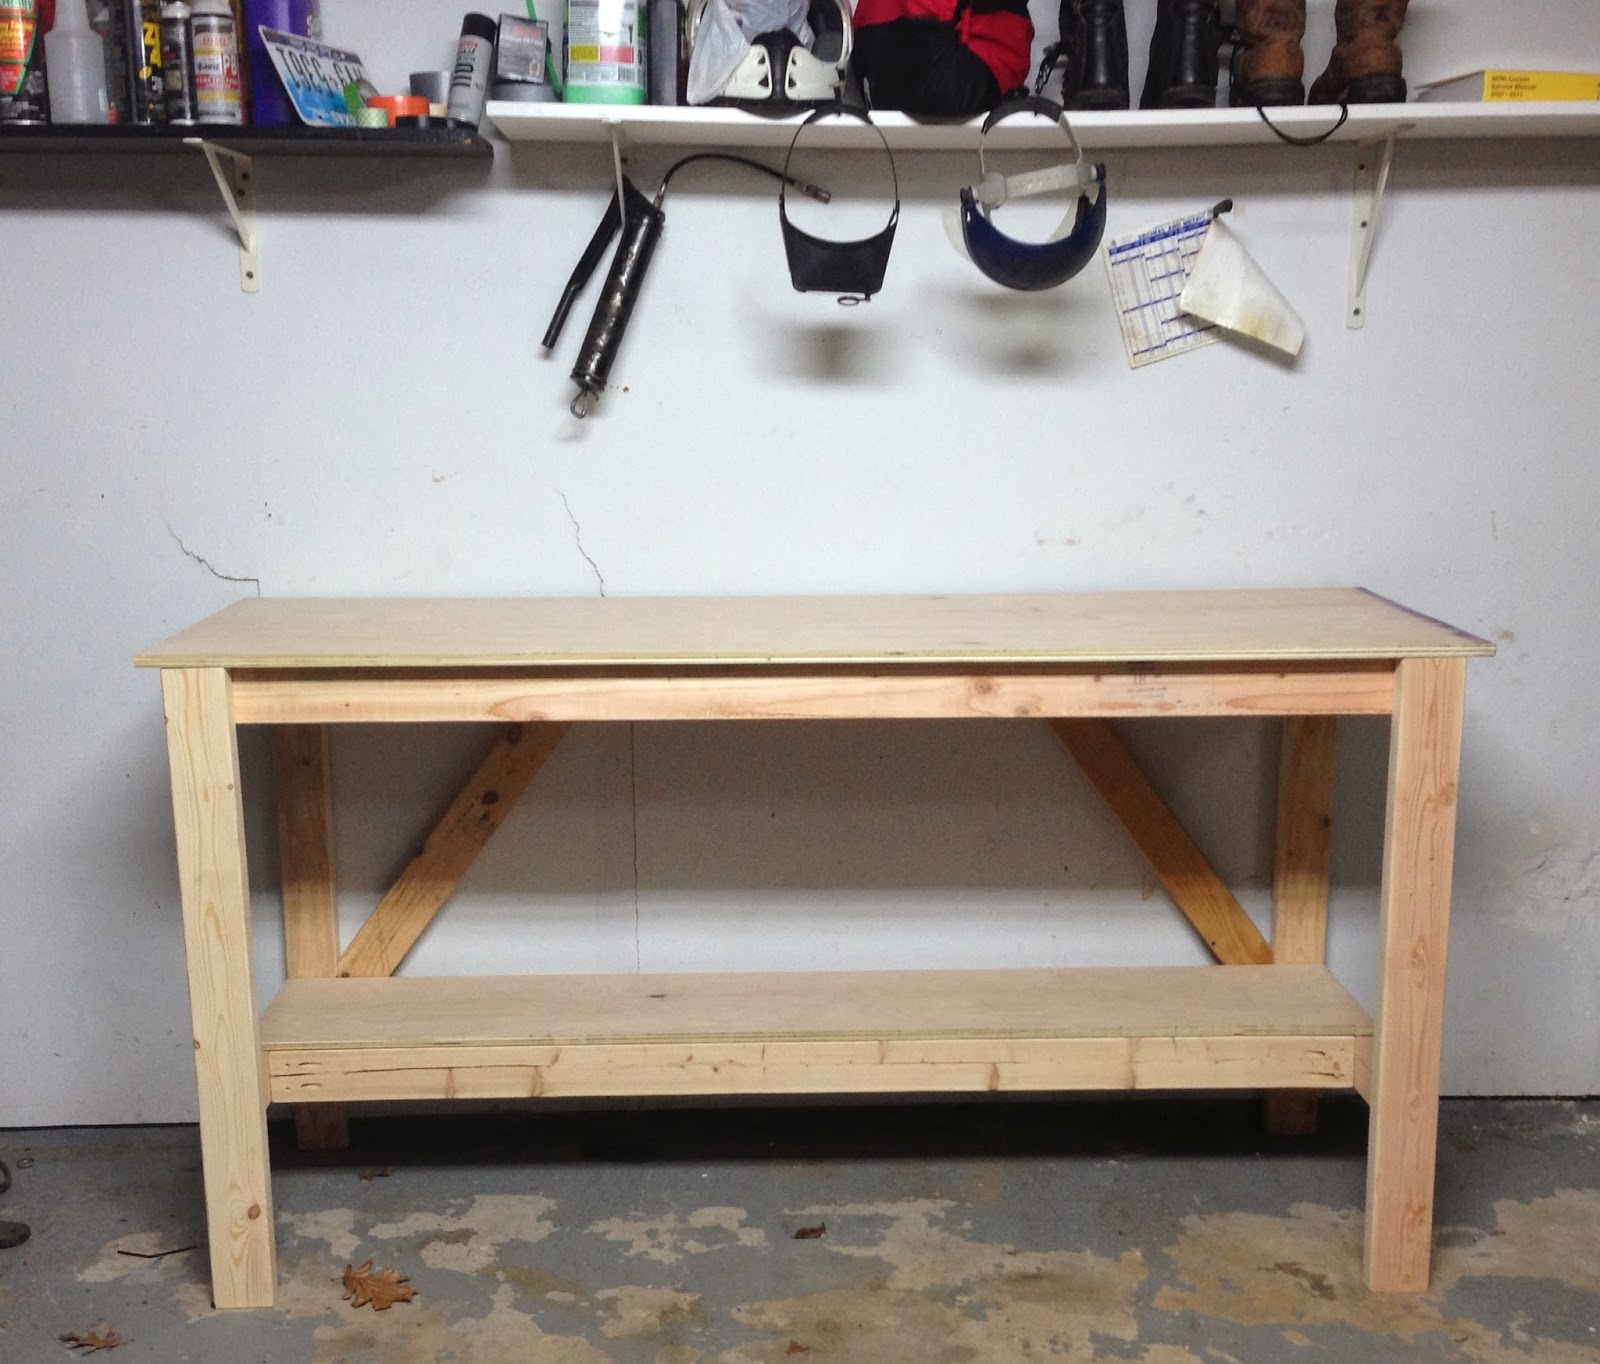 Wilker Do's: DIY Workbench